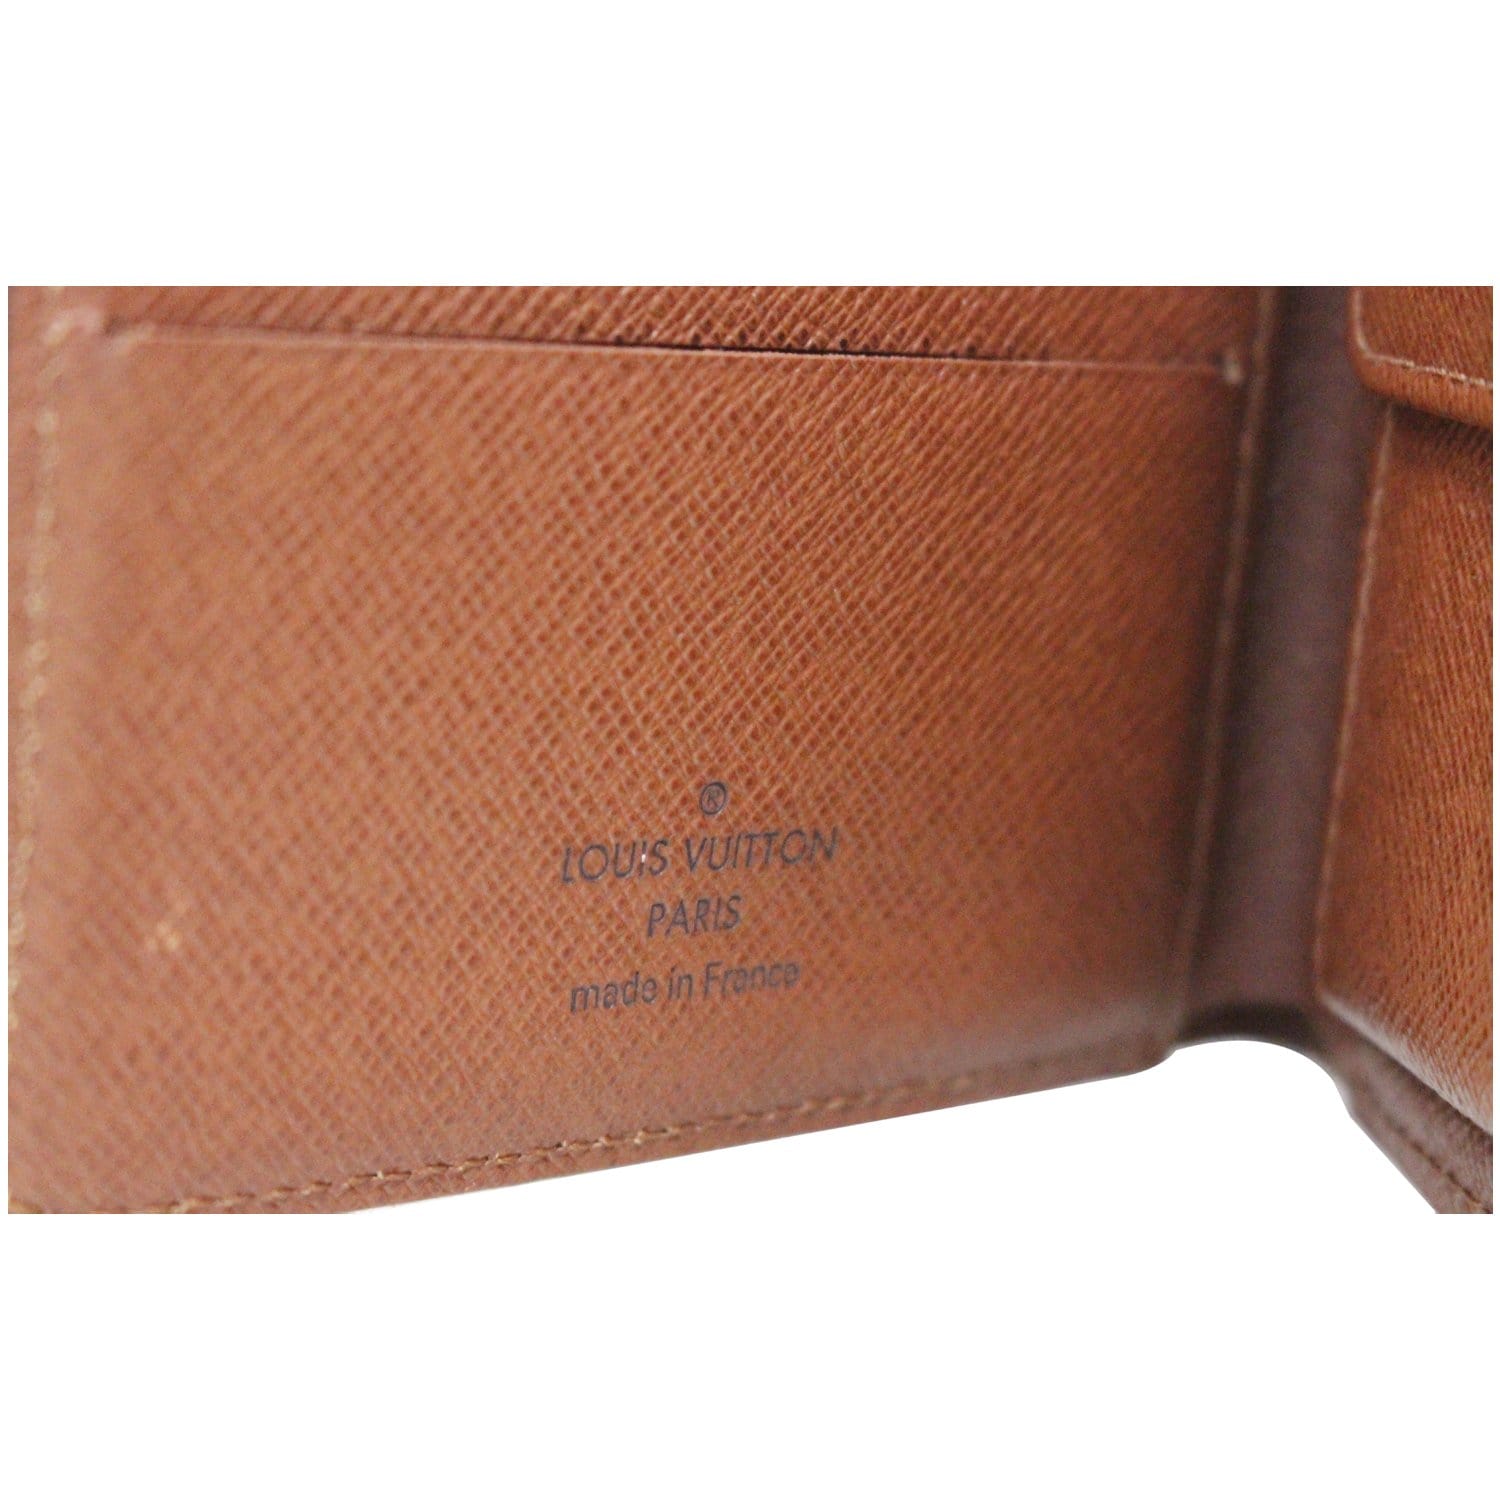 marco wallet brown